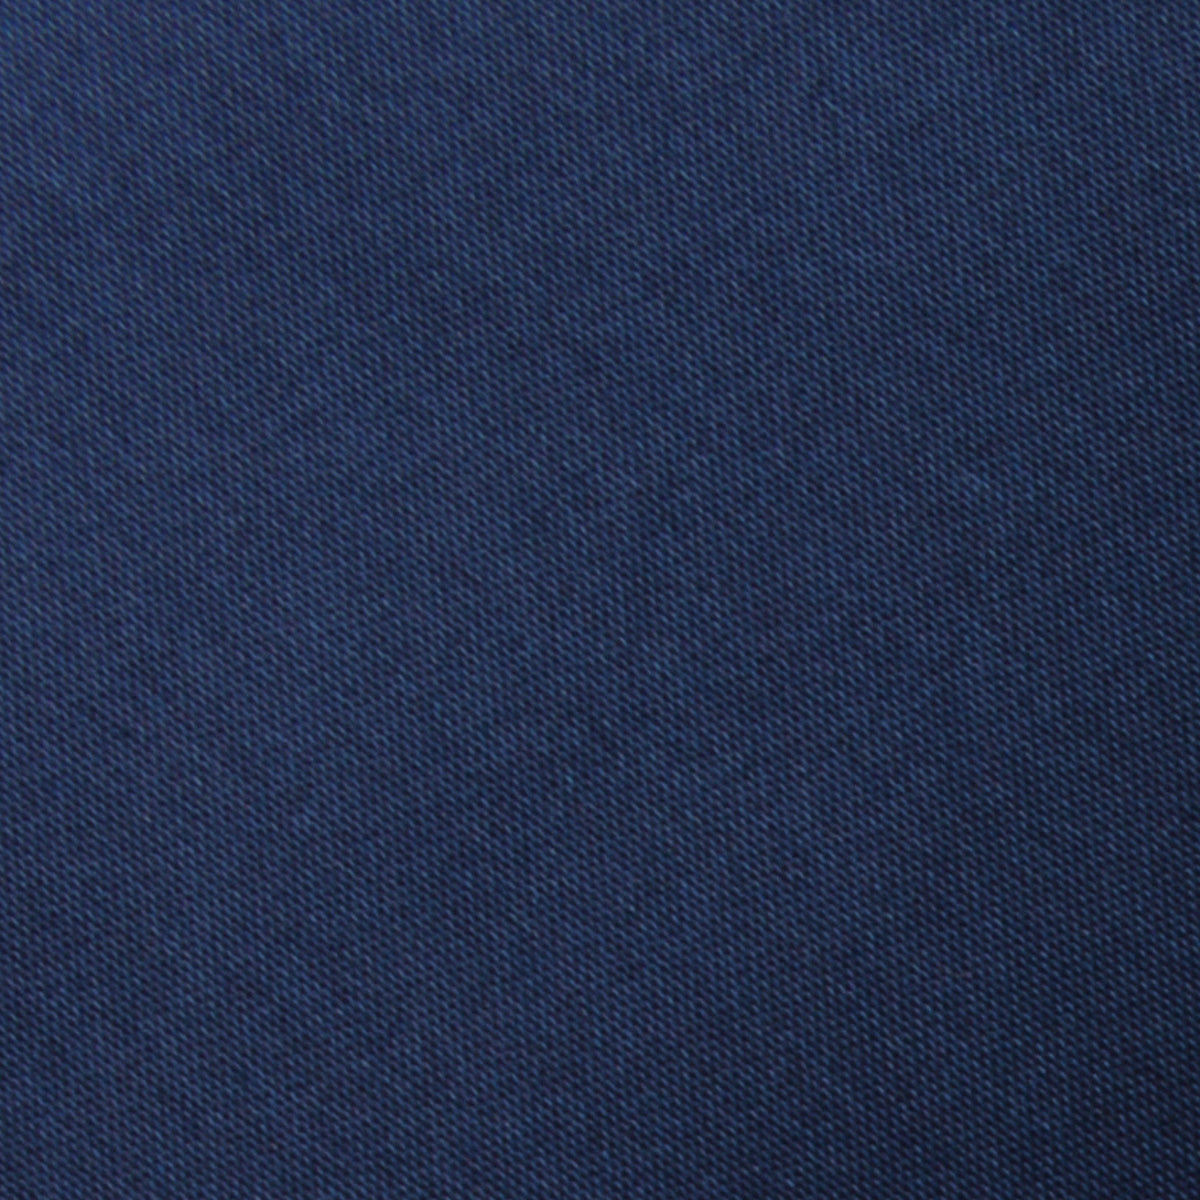 Admiral Navy Blue Satin Pocket Square Fabric